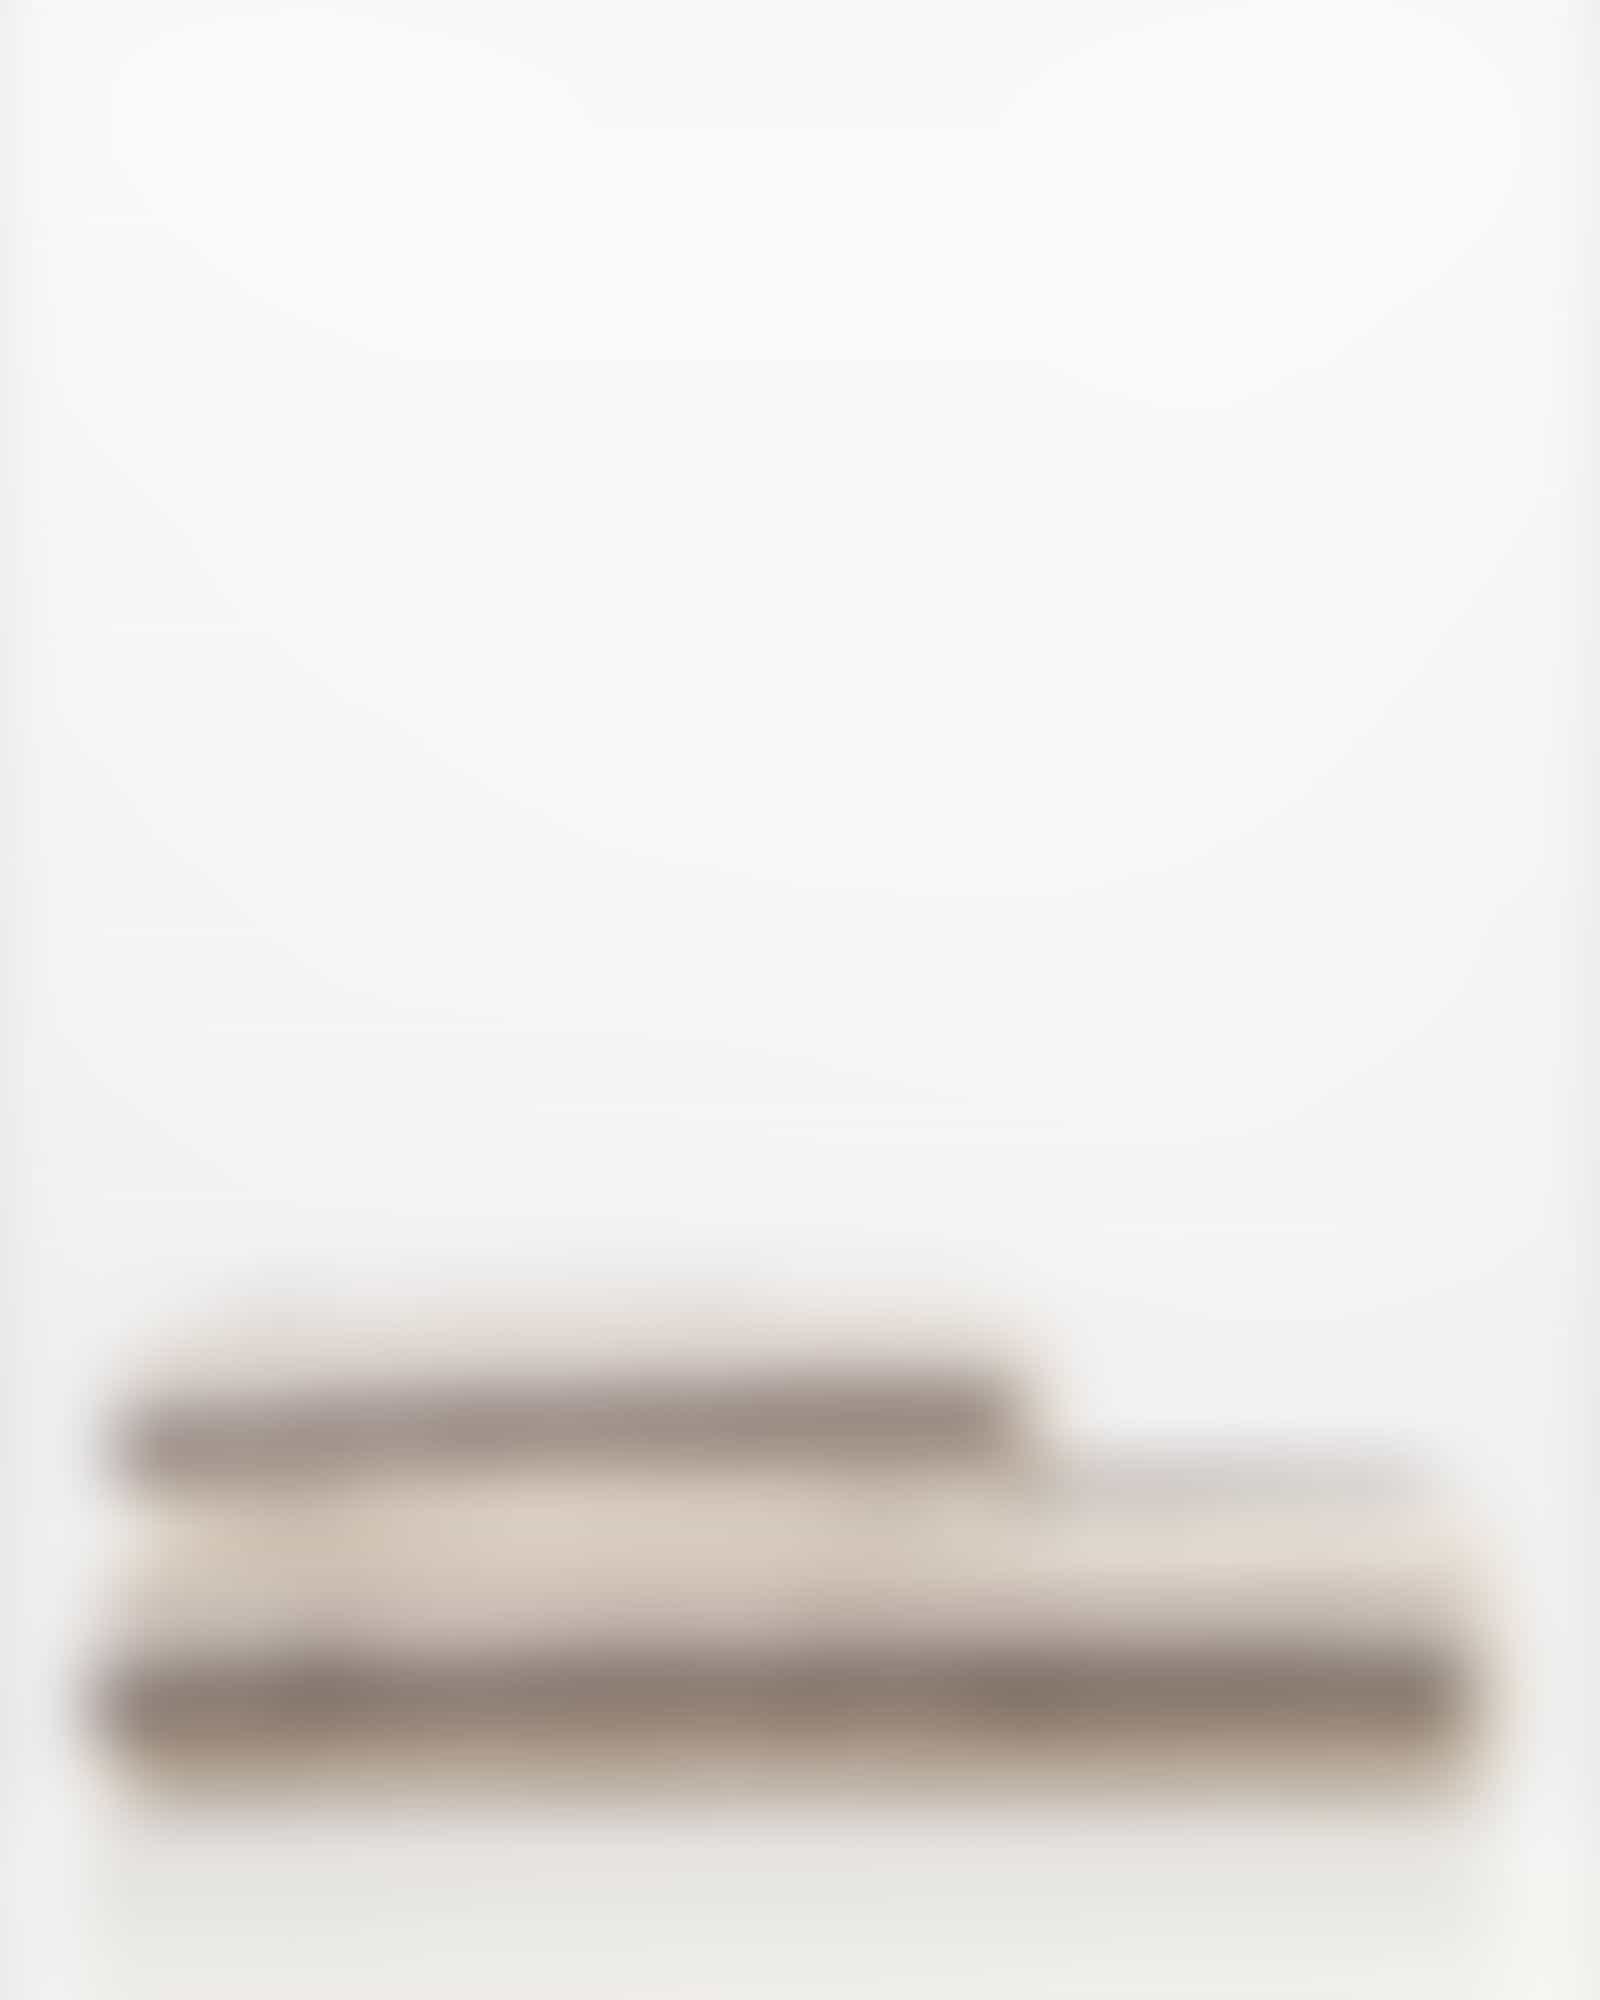 JOOP Move Stripes 1692 - Farbe: sand - 37 - Duschtuch 80x150 cm Detailbild 3